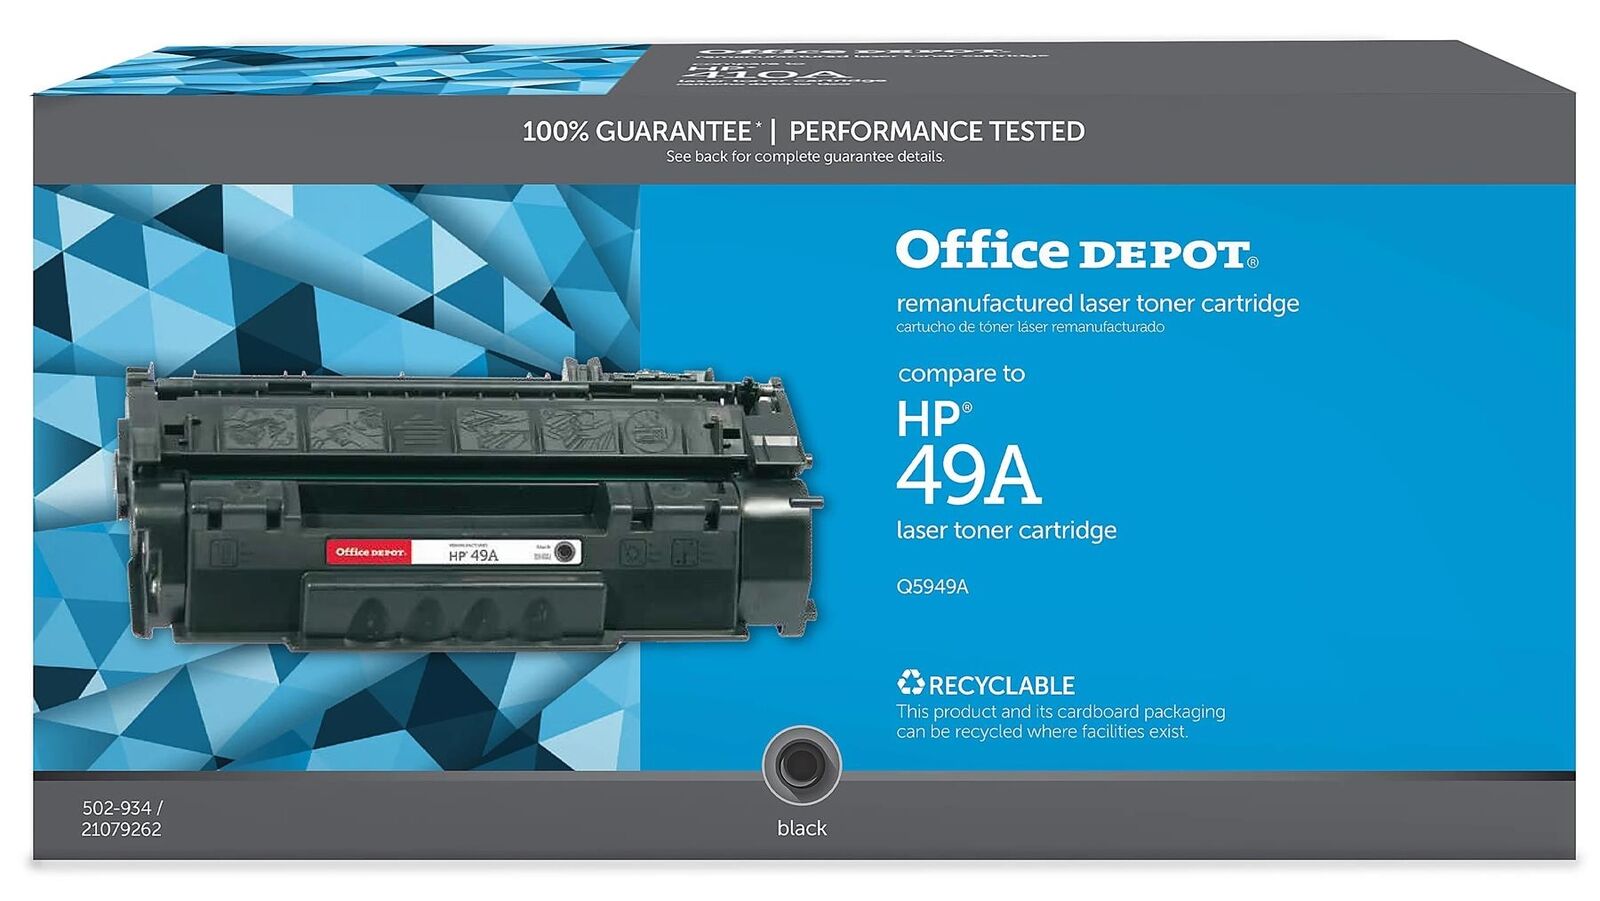 New Office Depot Reman Toner Cartridge Replaces HP 49A, Black